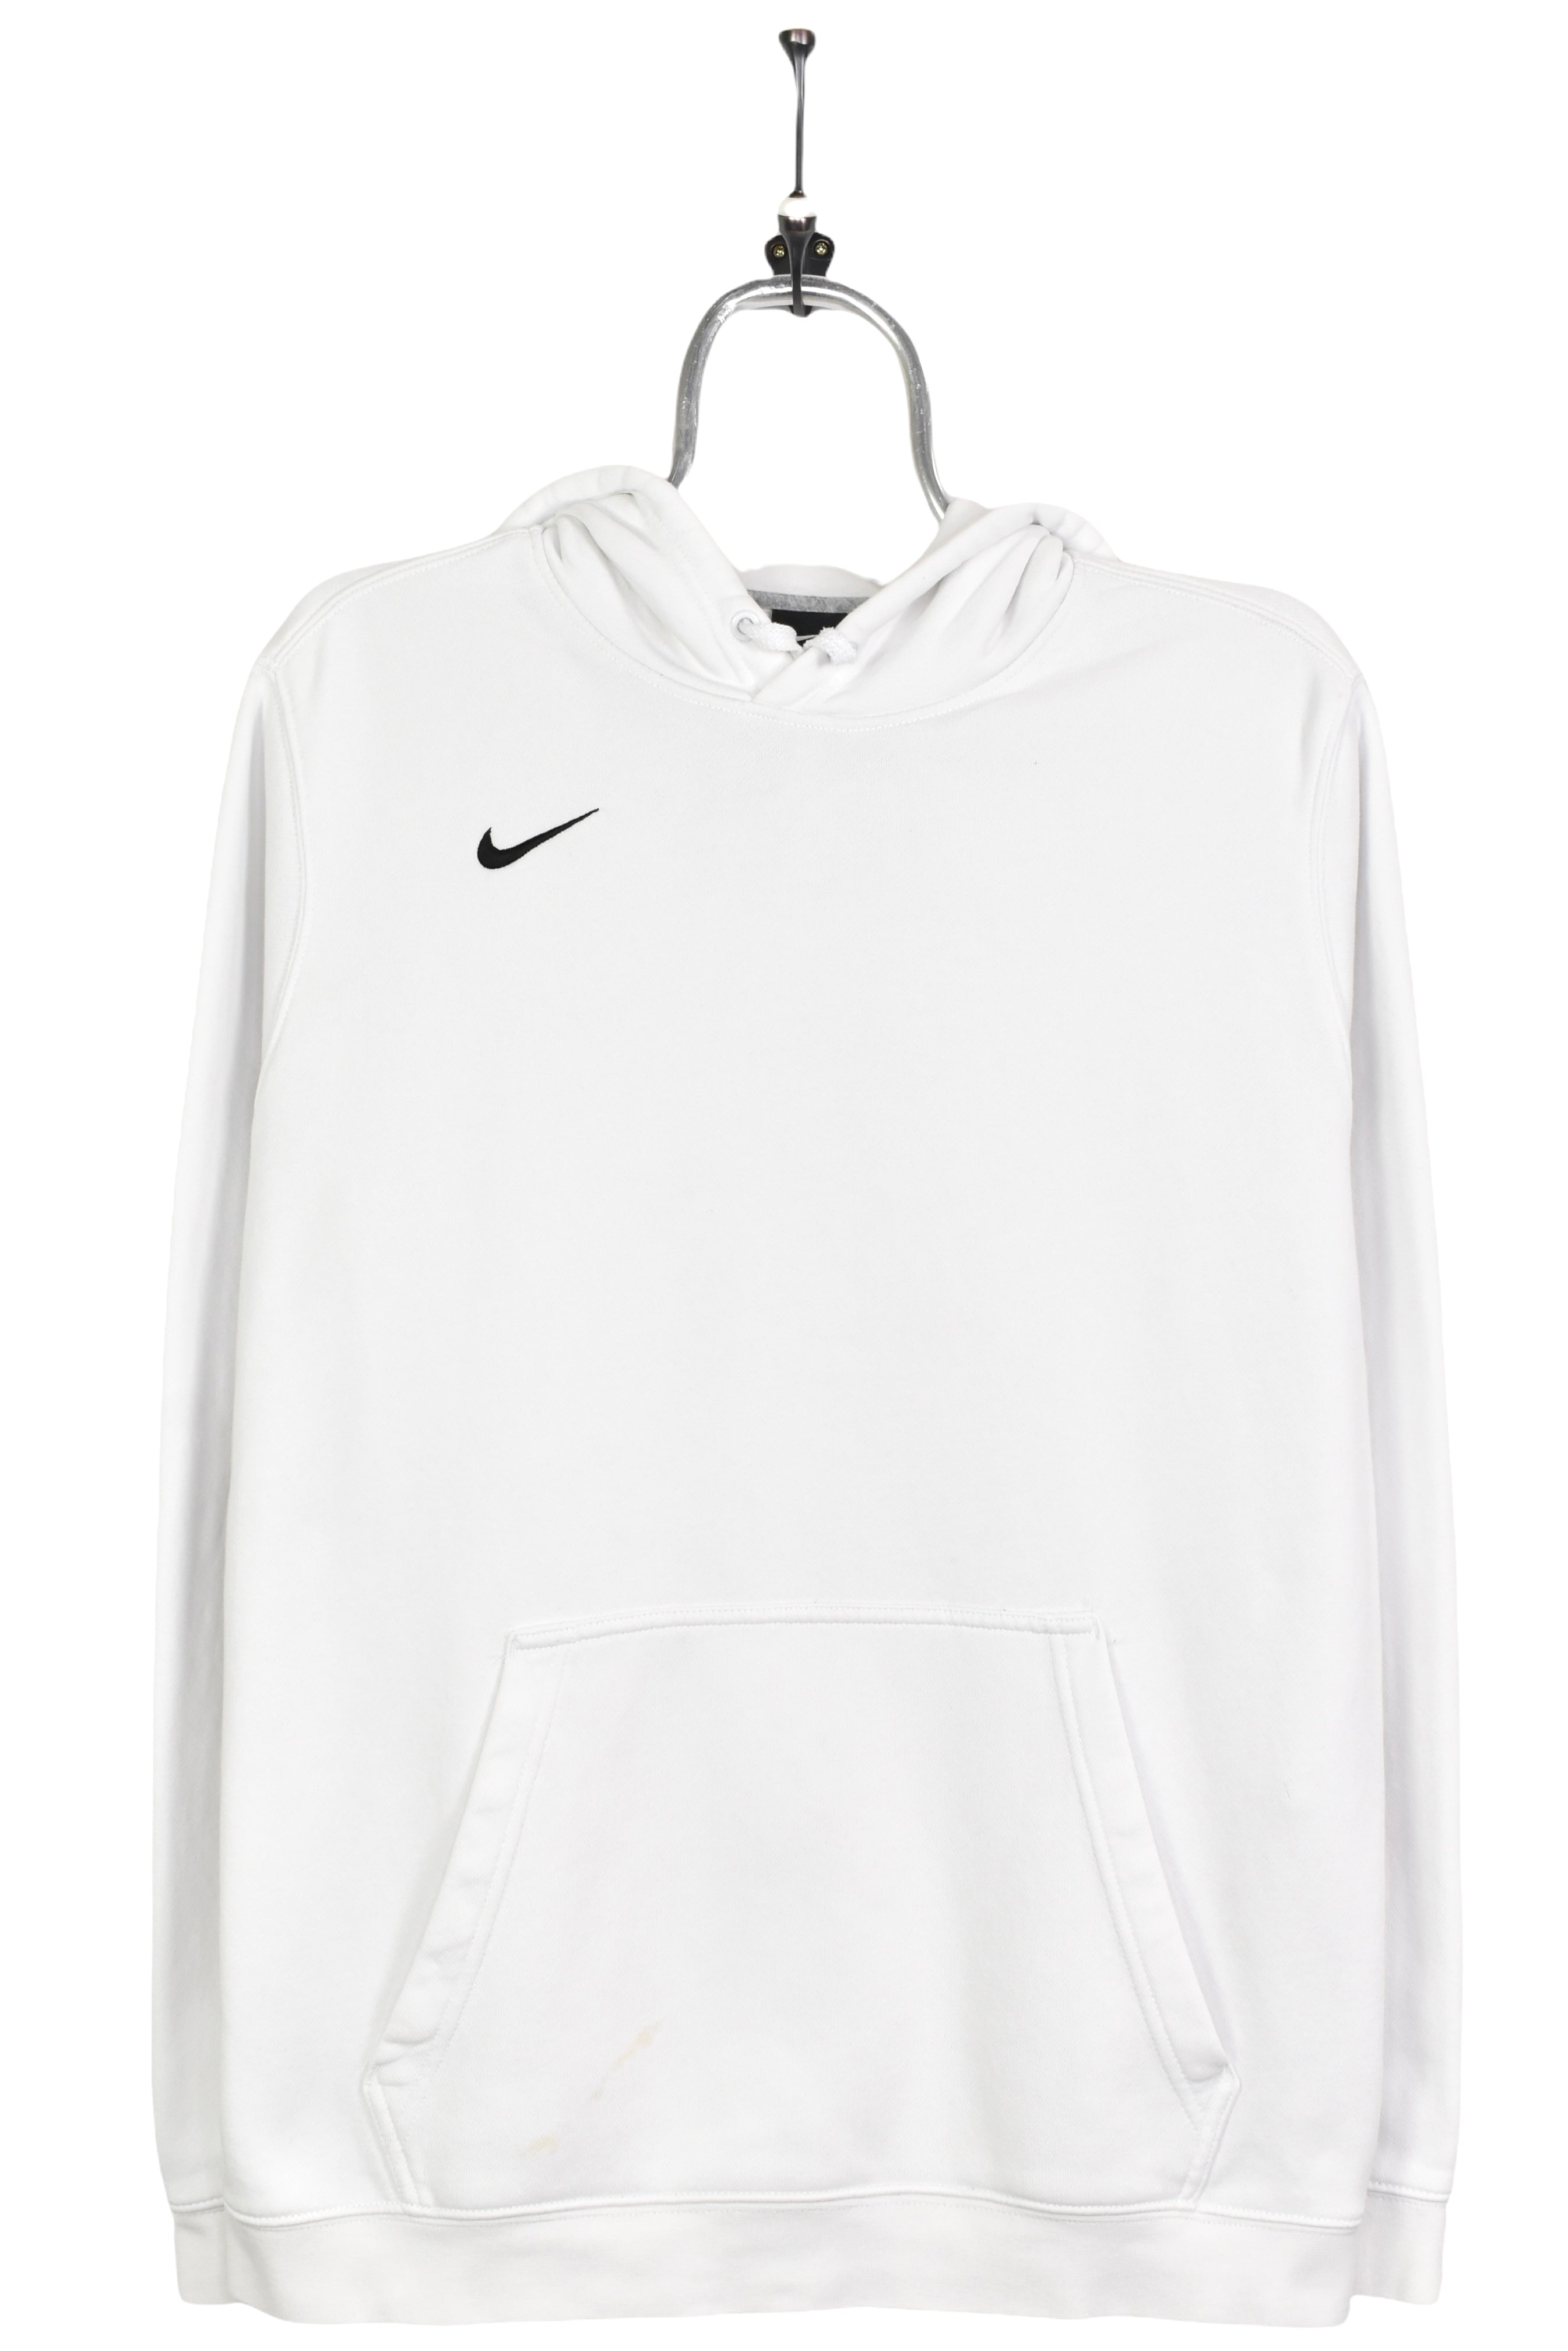 Vintage Nike embroidered white hoodie | Large NIKE